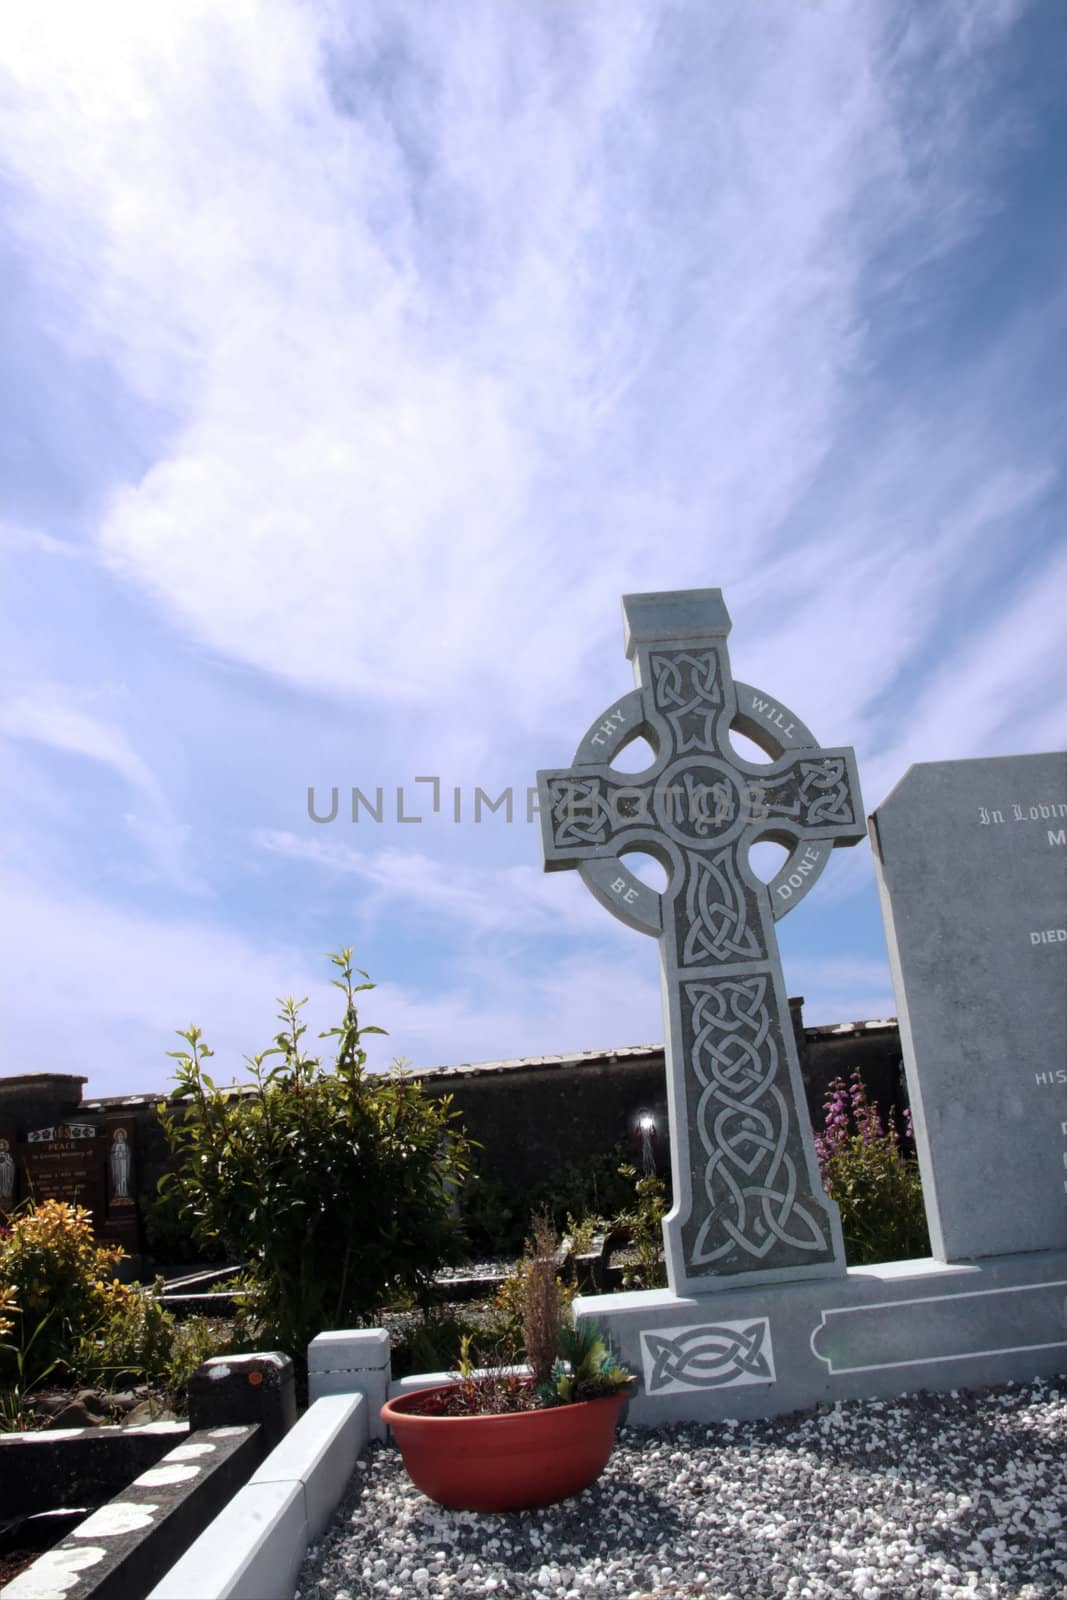 an old irish graveyard in Kerry on the west coast of Ireland